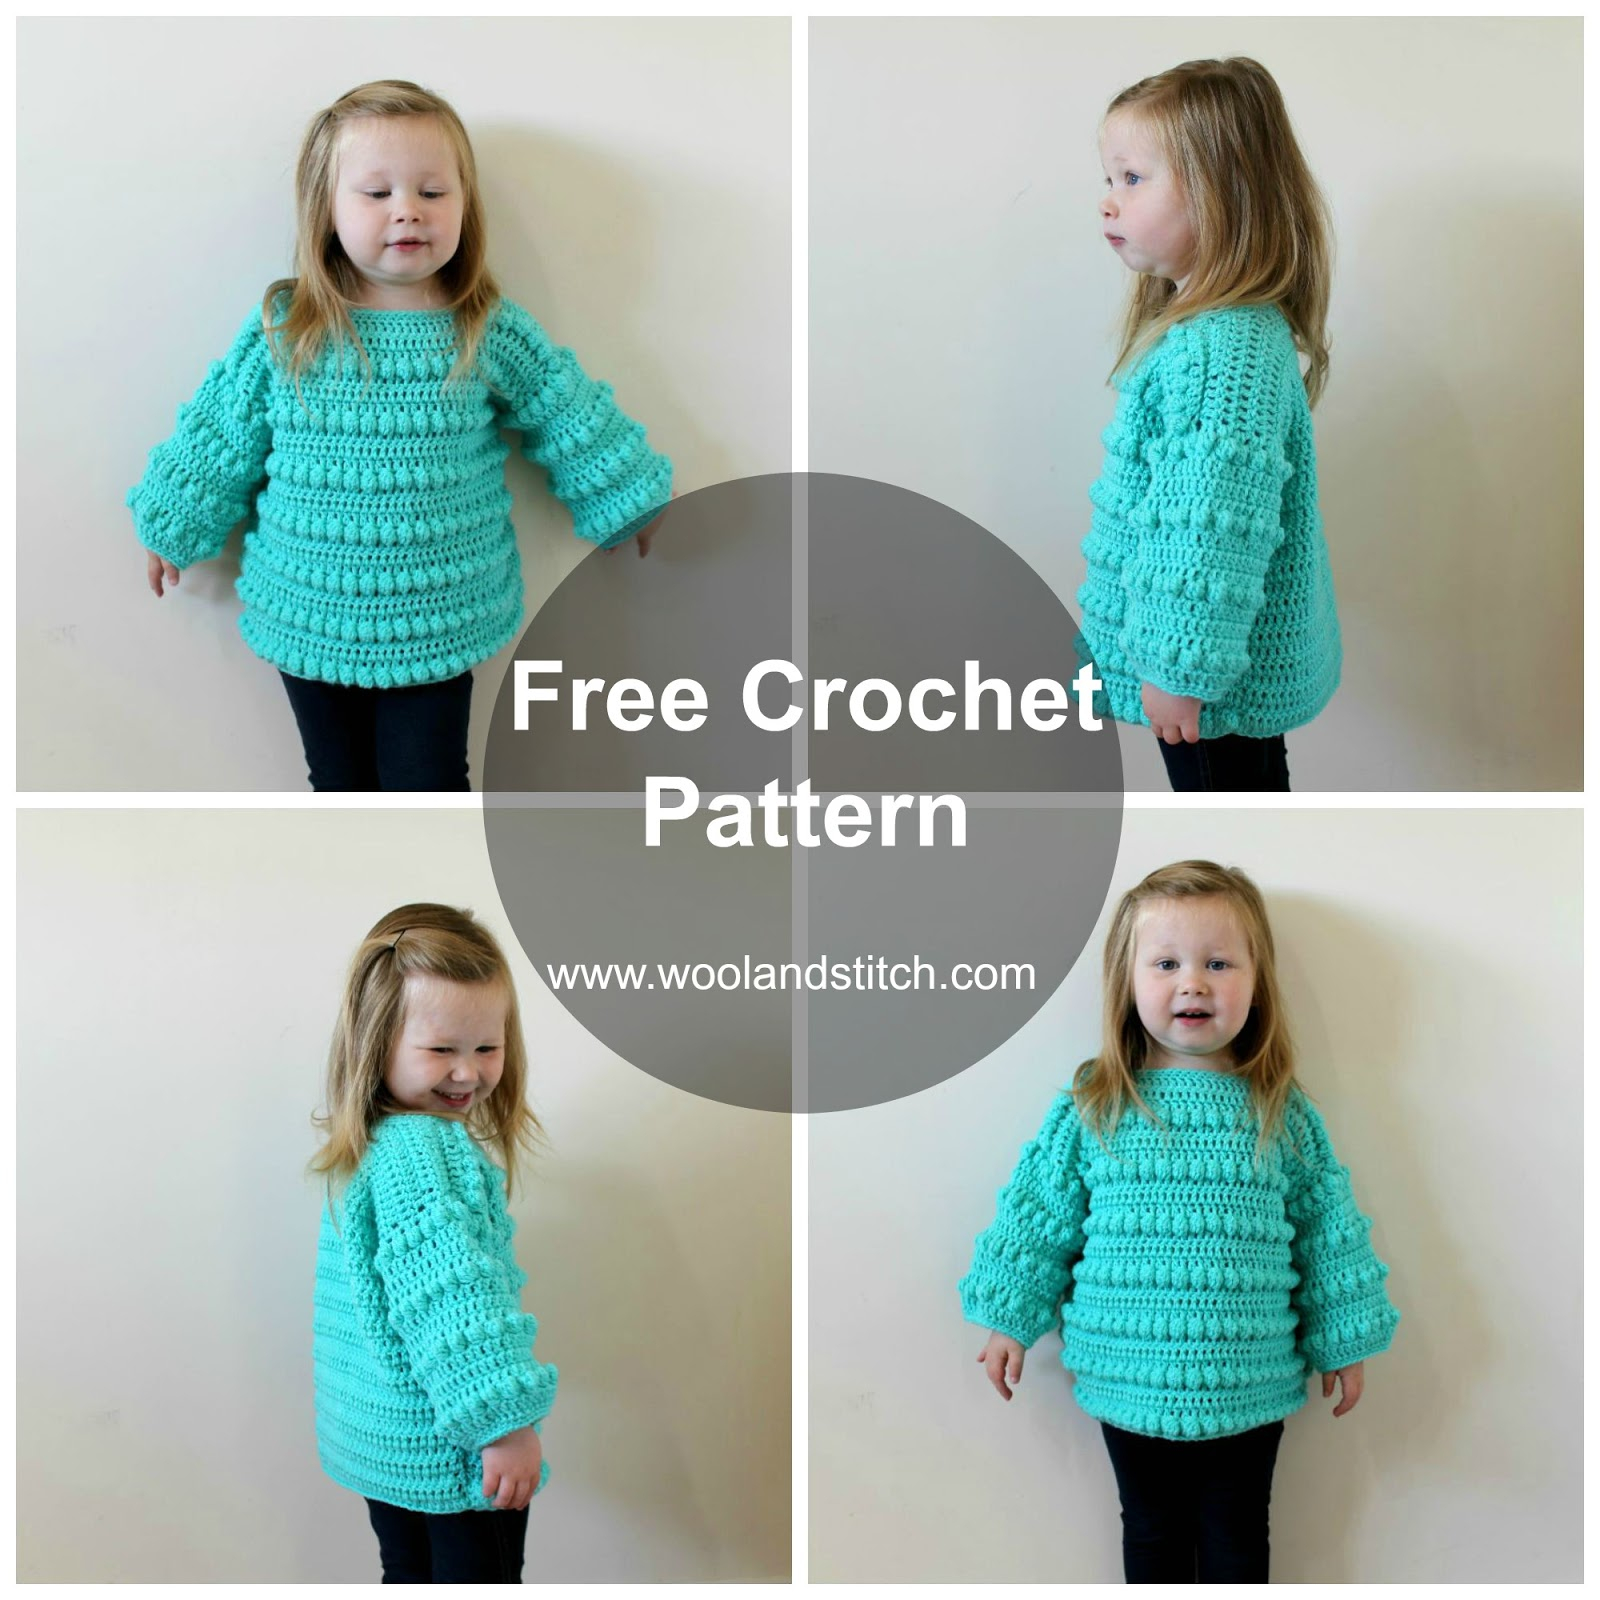 Free Crochet Sweater Patterns Mini Kids Bobble Sweater Free Crochet Pattern Wool And Stitch